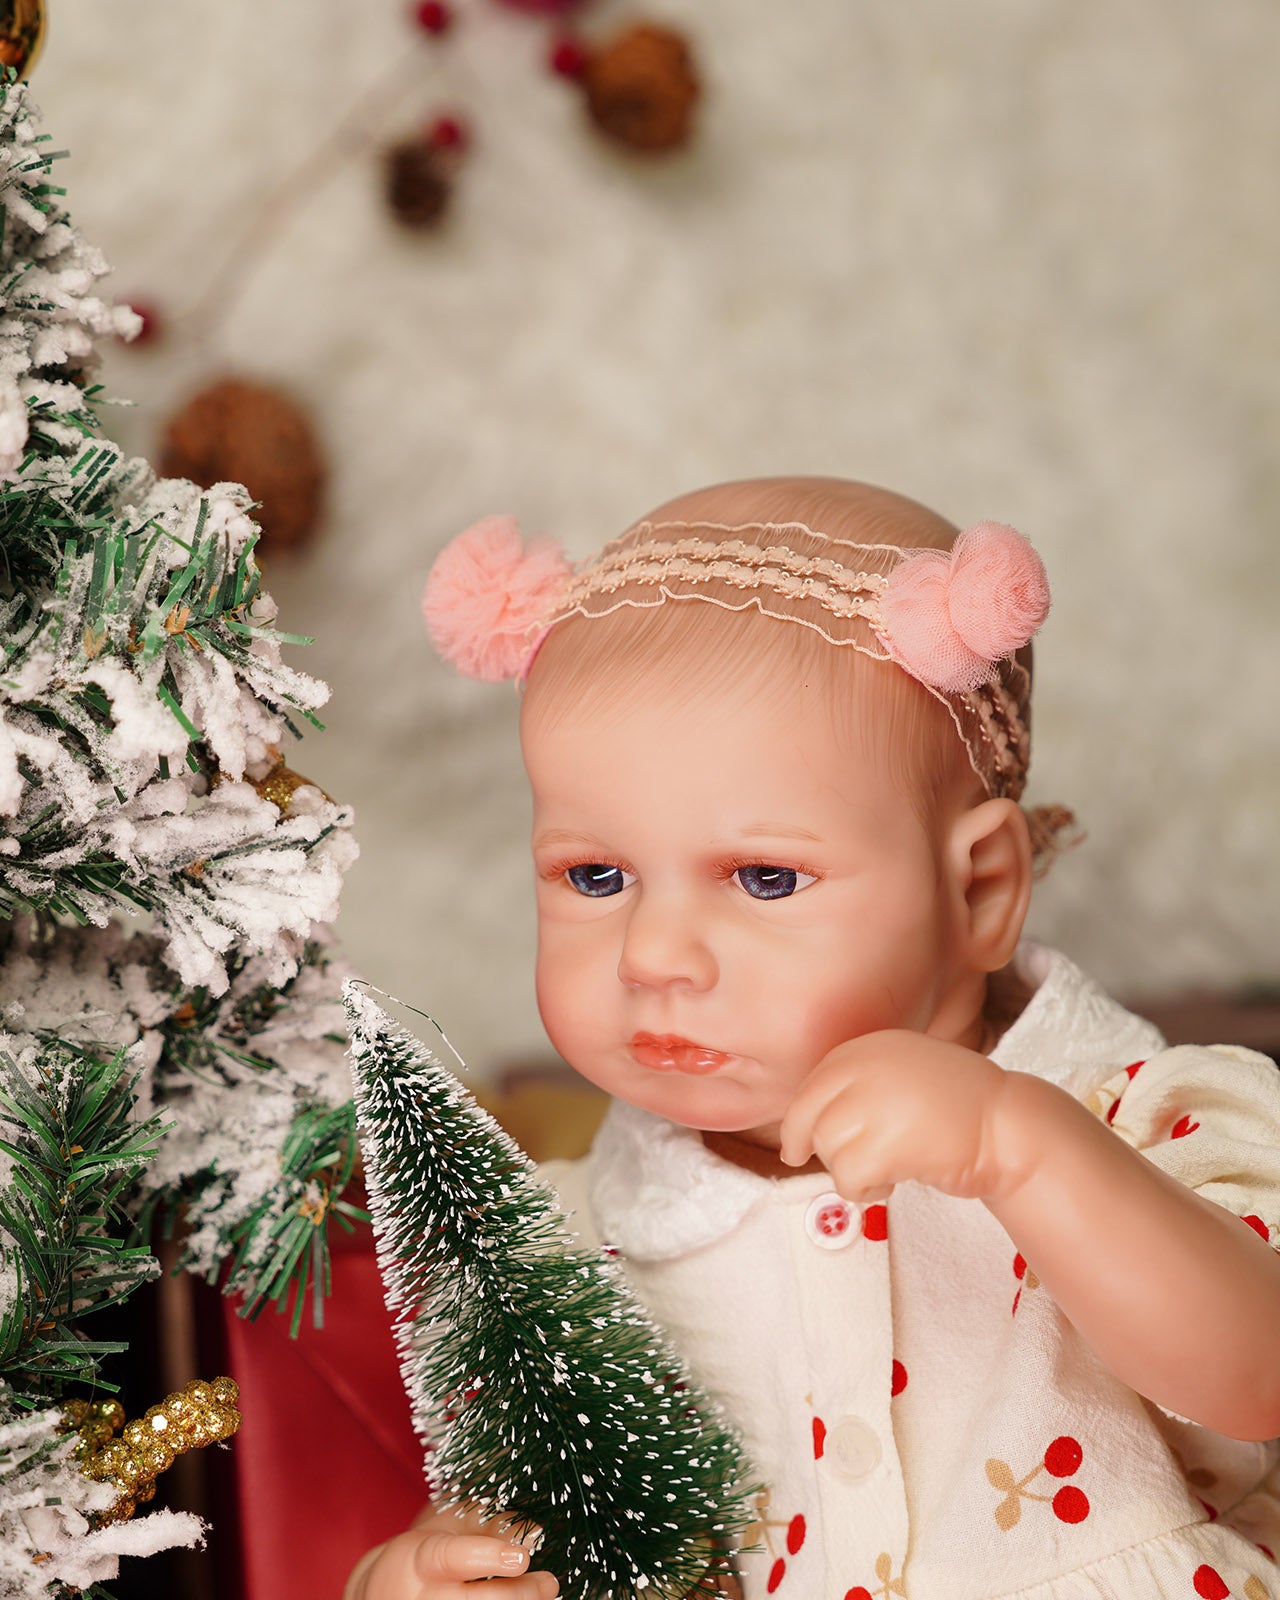 Joanna - 20" Reborn Baby Dolls Cherubic Cute Newborn Girl with 3D-Paint Skin